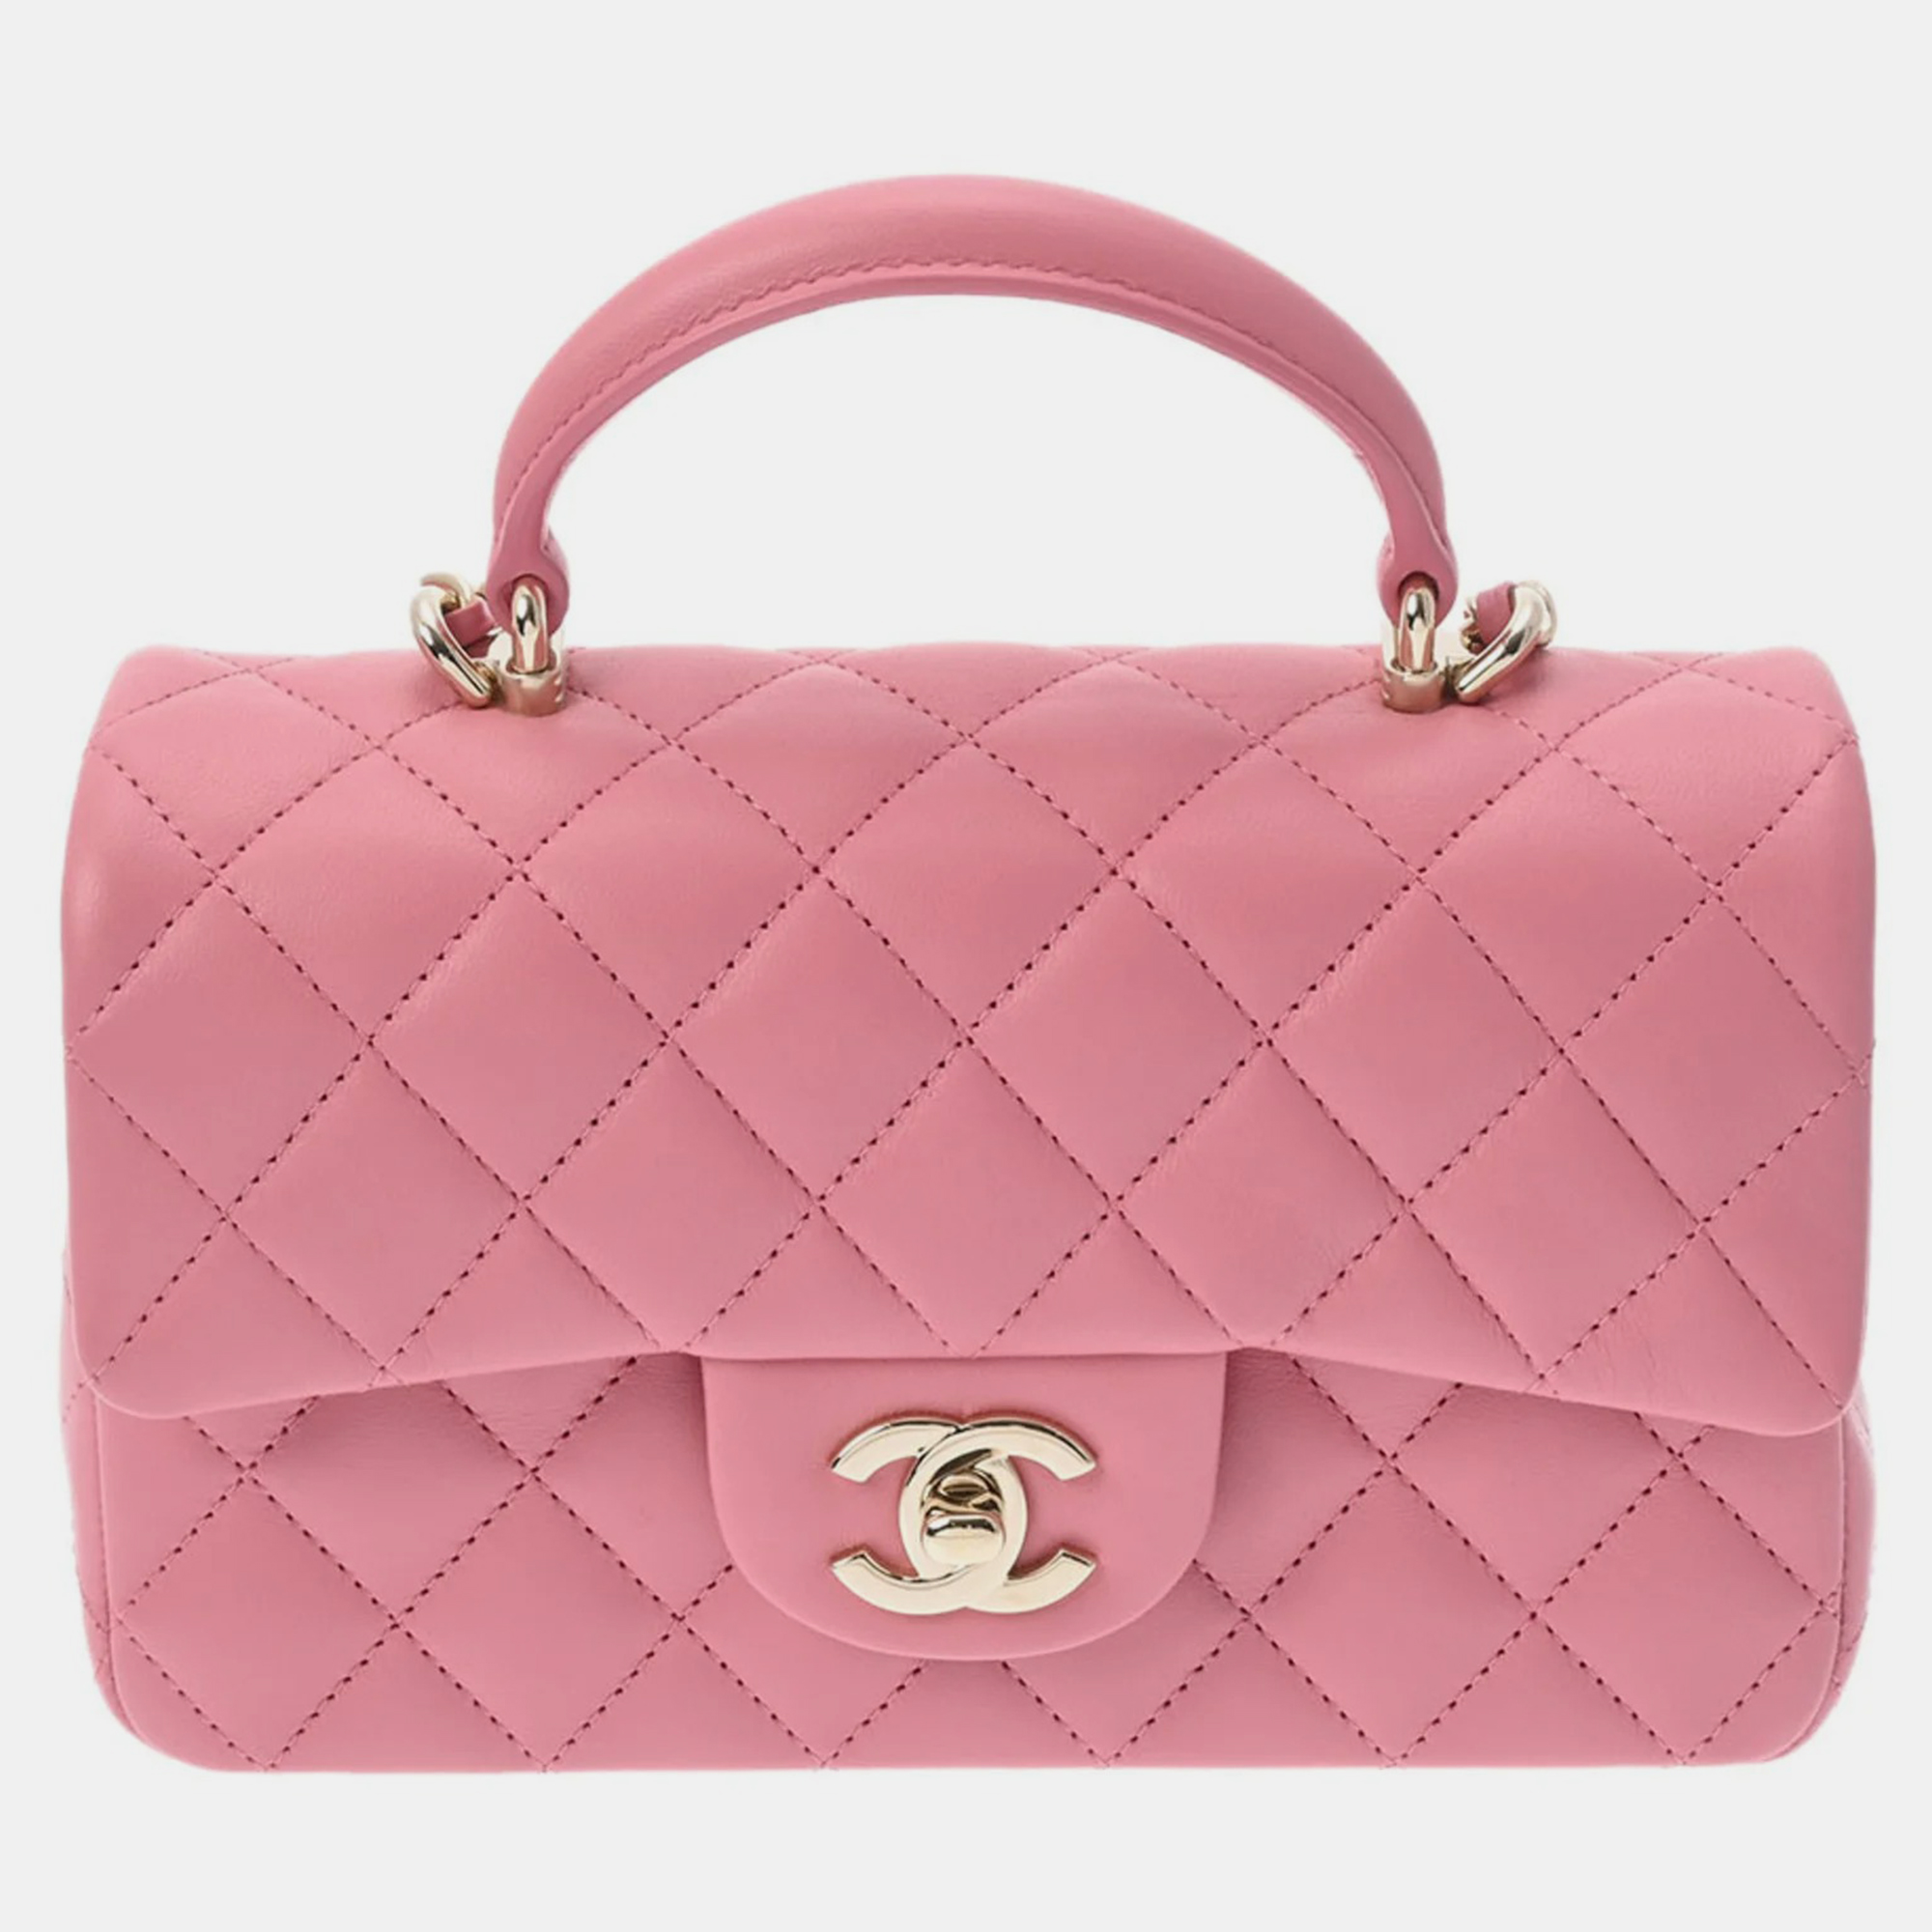 Chanel pink lambskin leather mini rectangular flap top handle bag